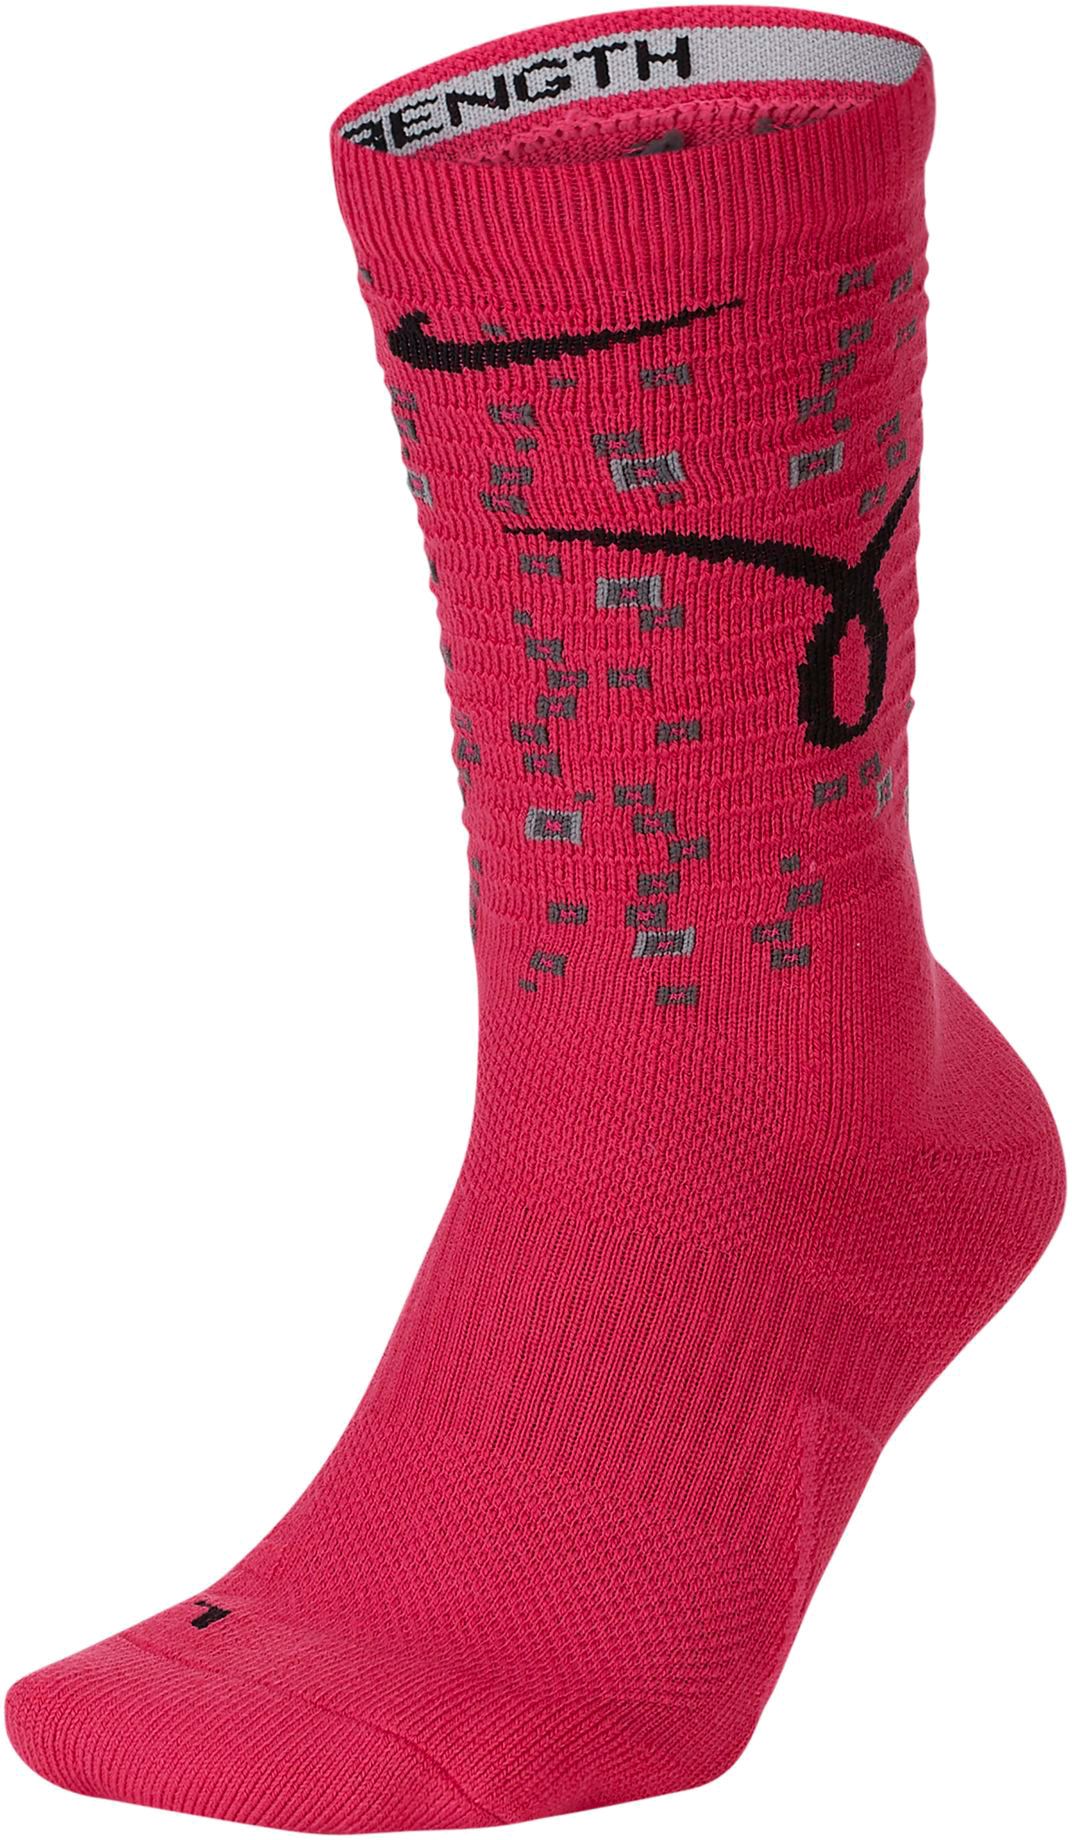 pink nike elite socks breast cancer